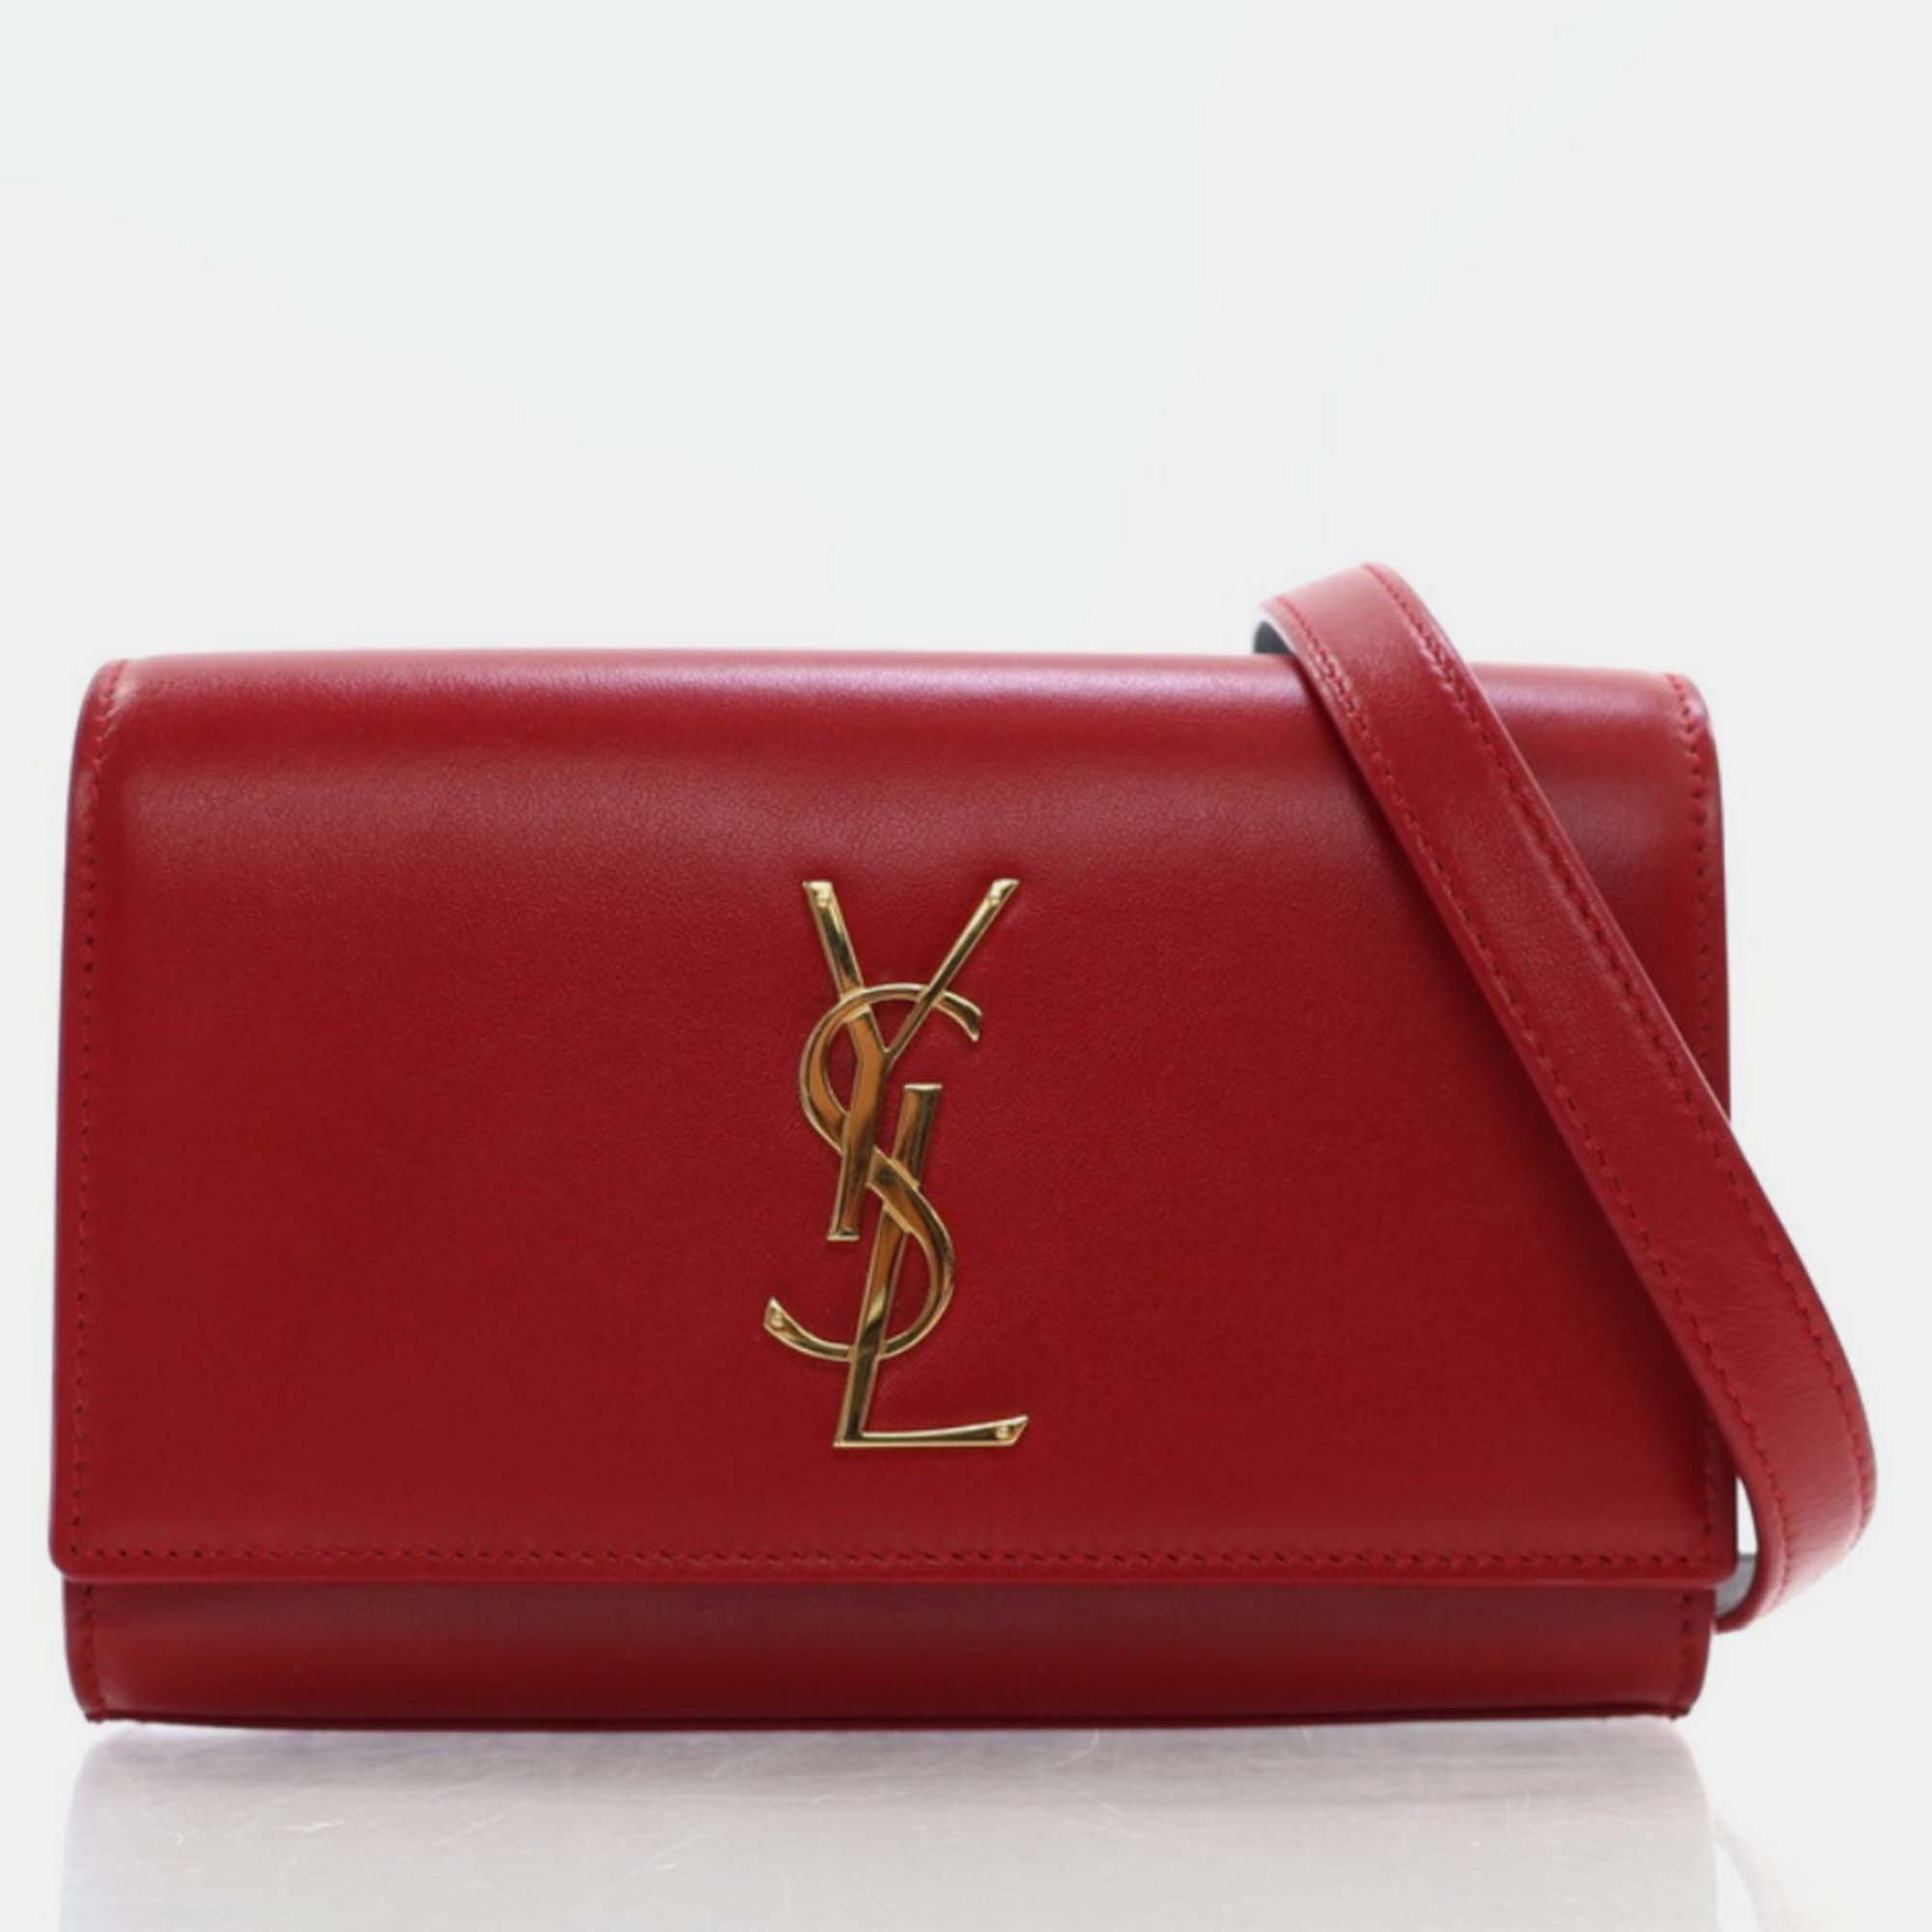 Saint laurent paris red leather monogram kate belt bag